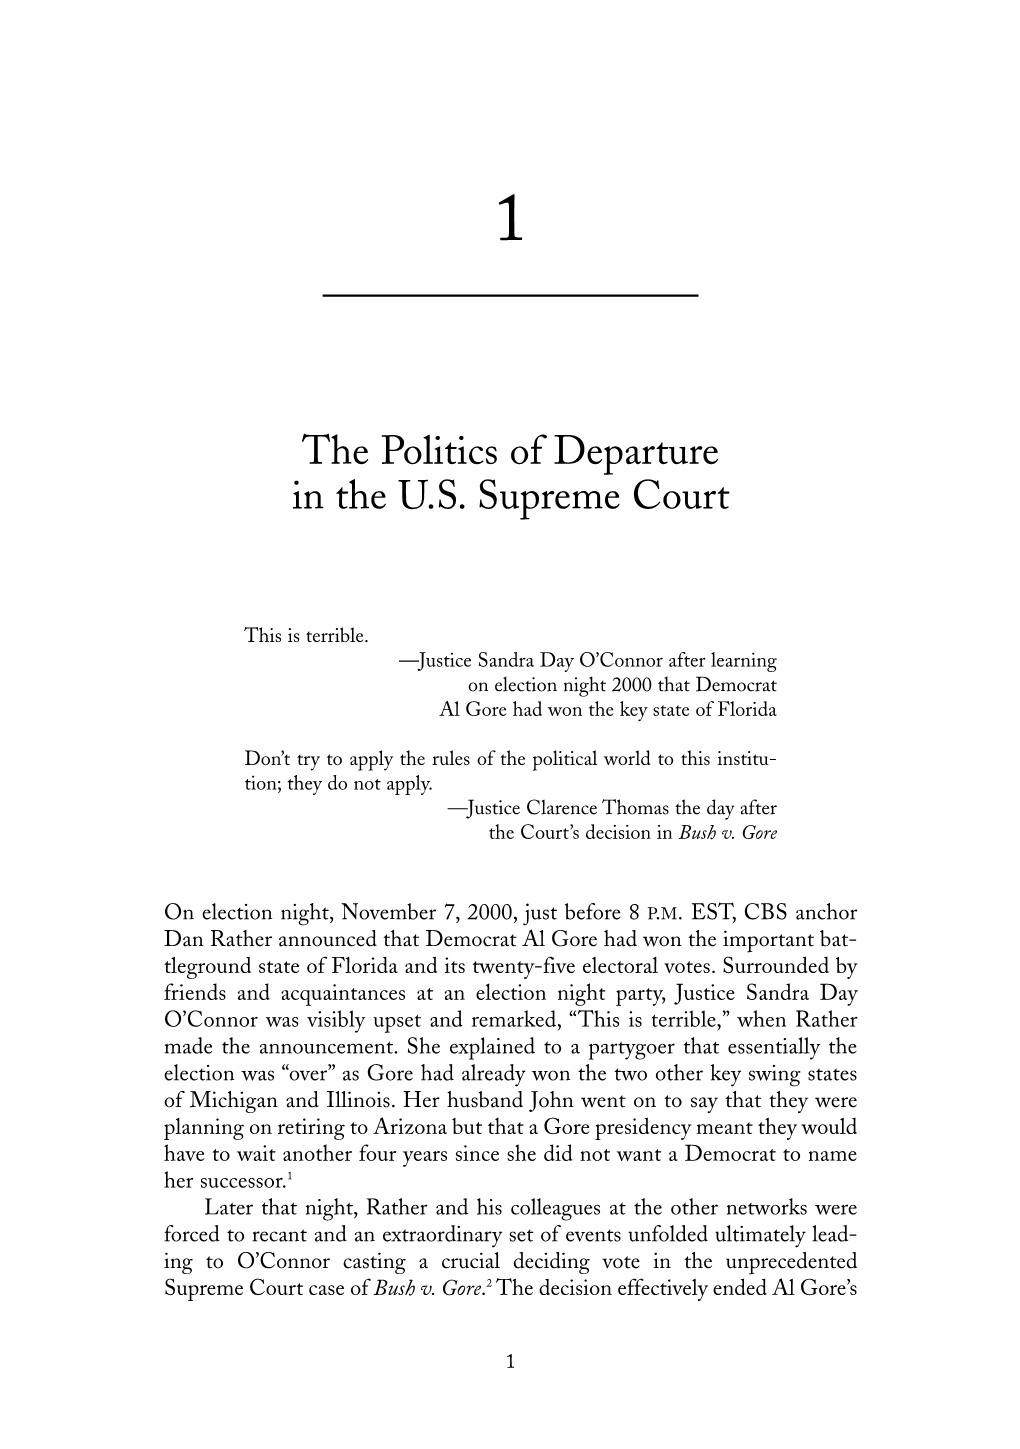 The Politics of Departure in the U.S. Supreme Court